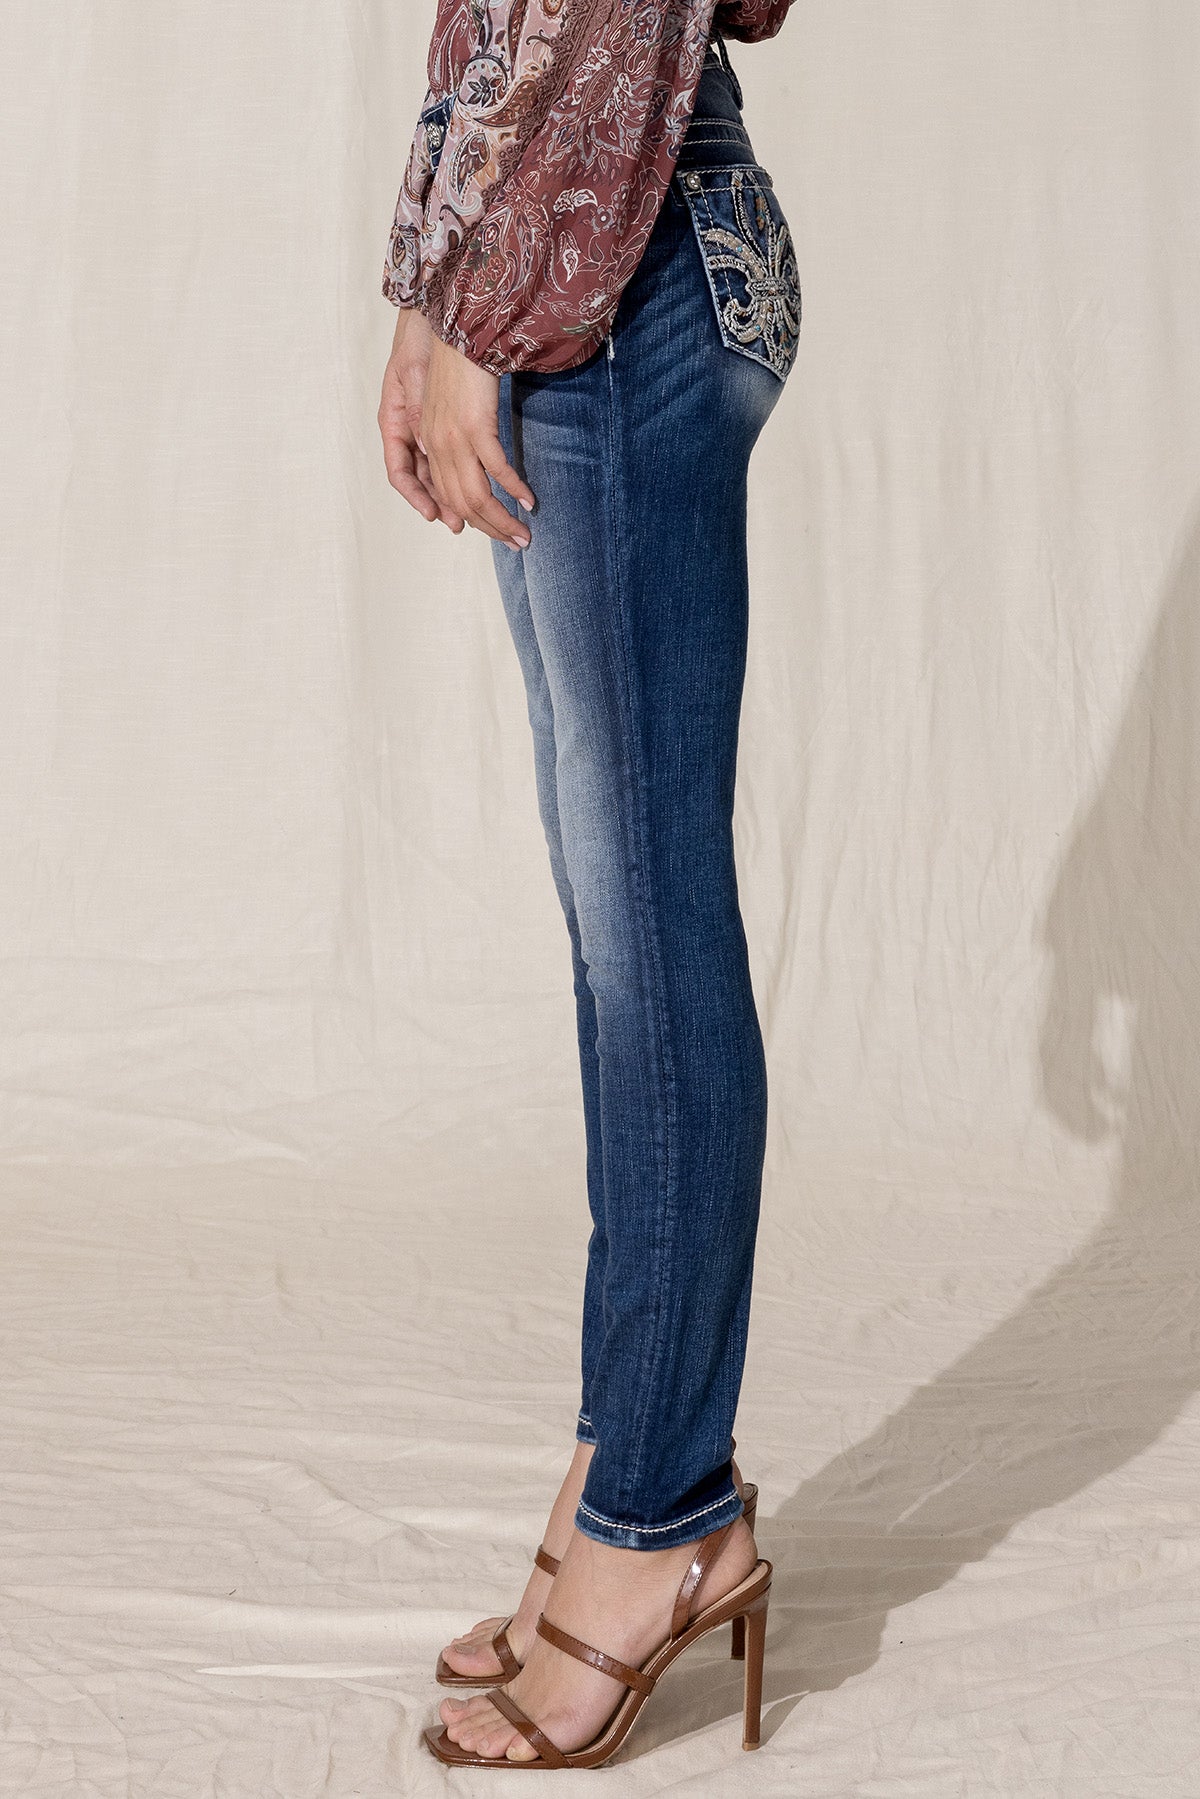 Petite Rhinestone Fleur-de-lis Jeans